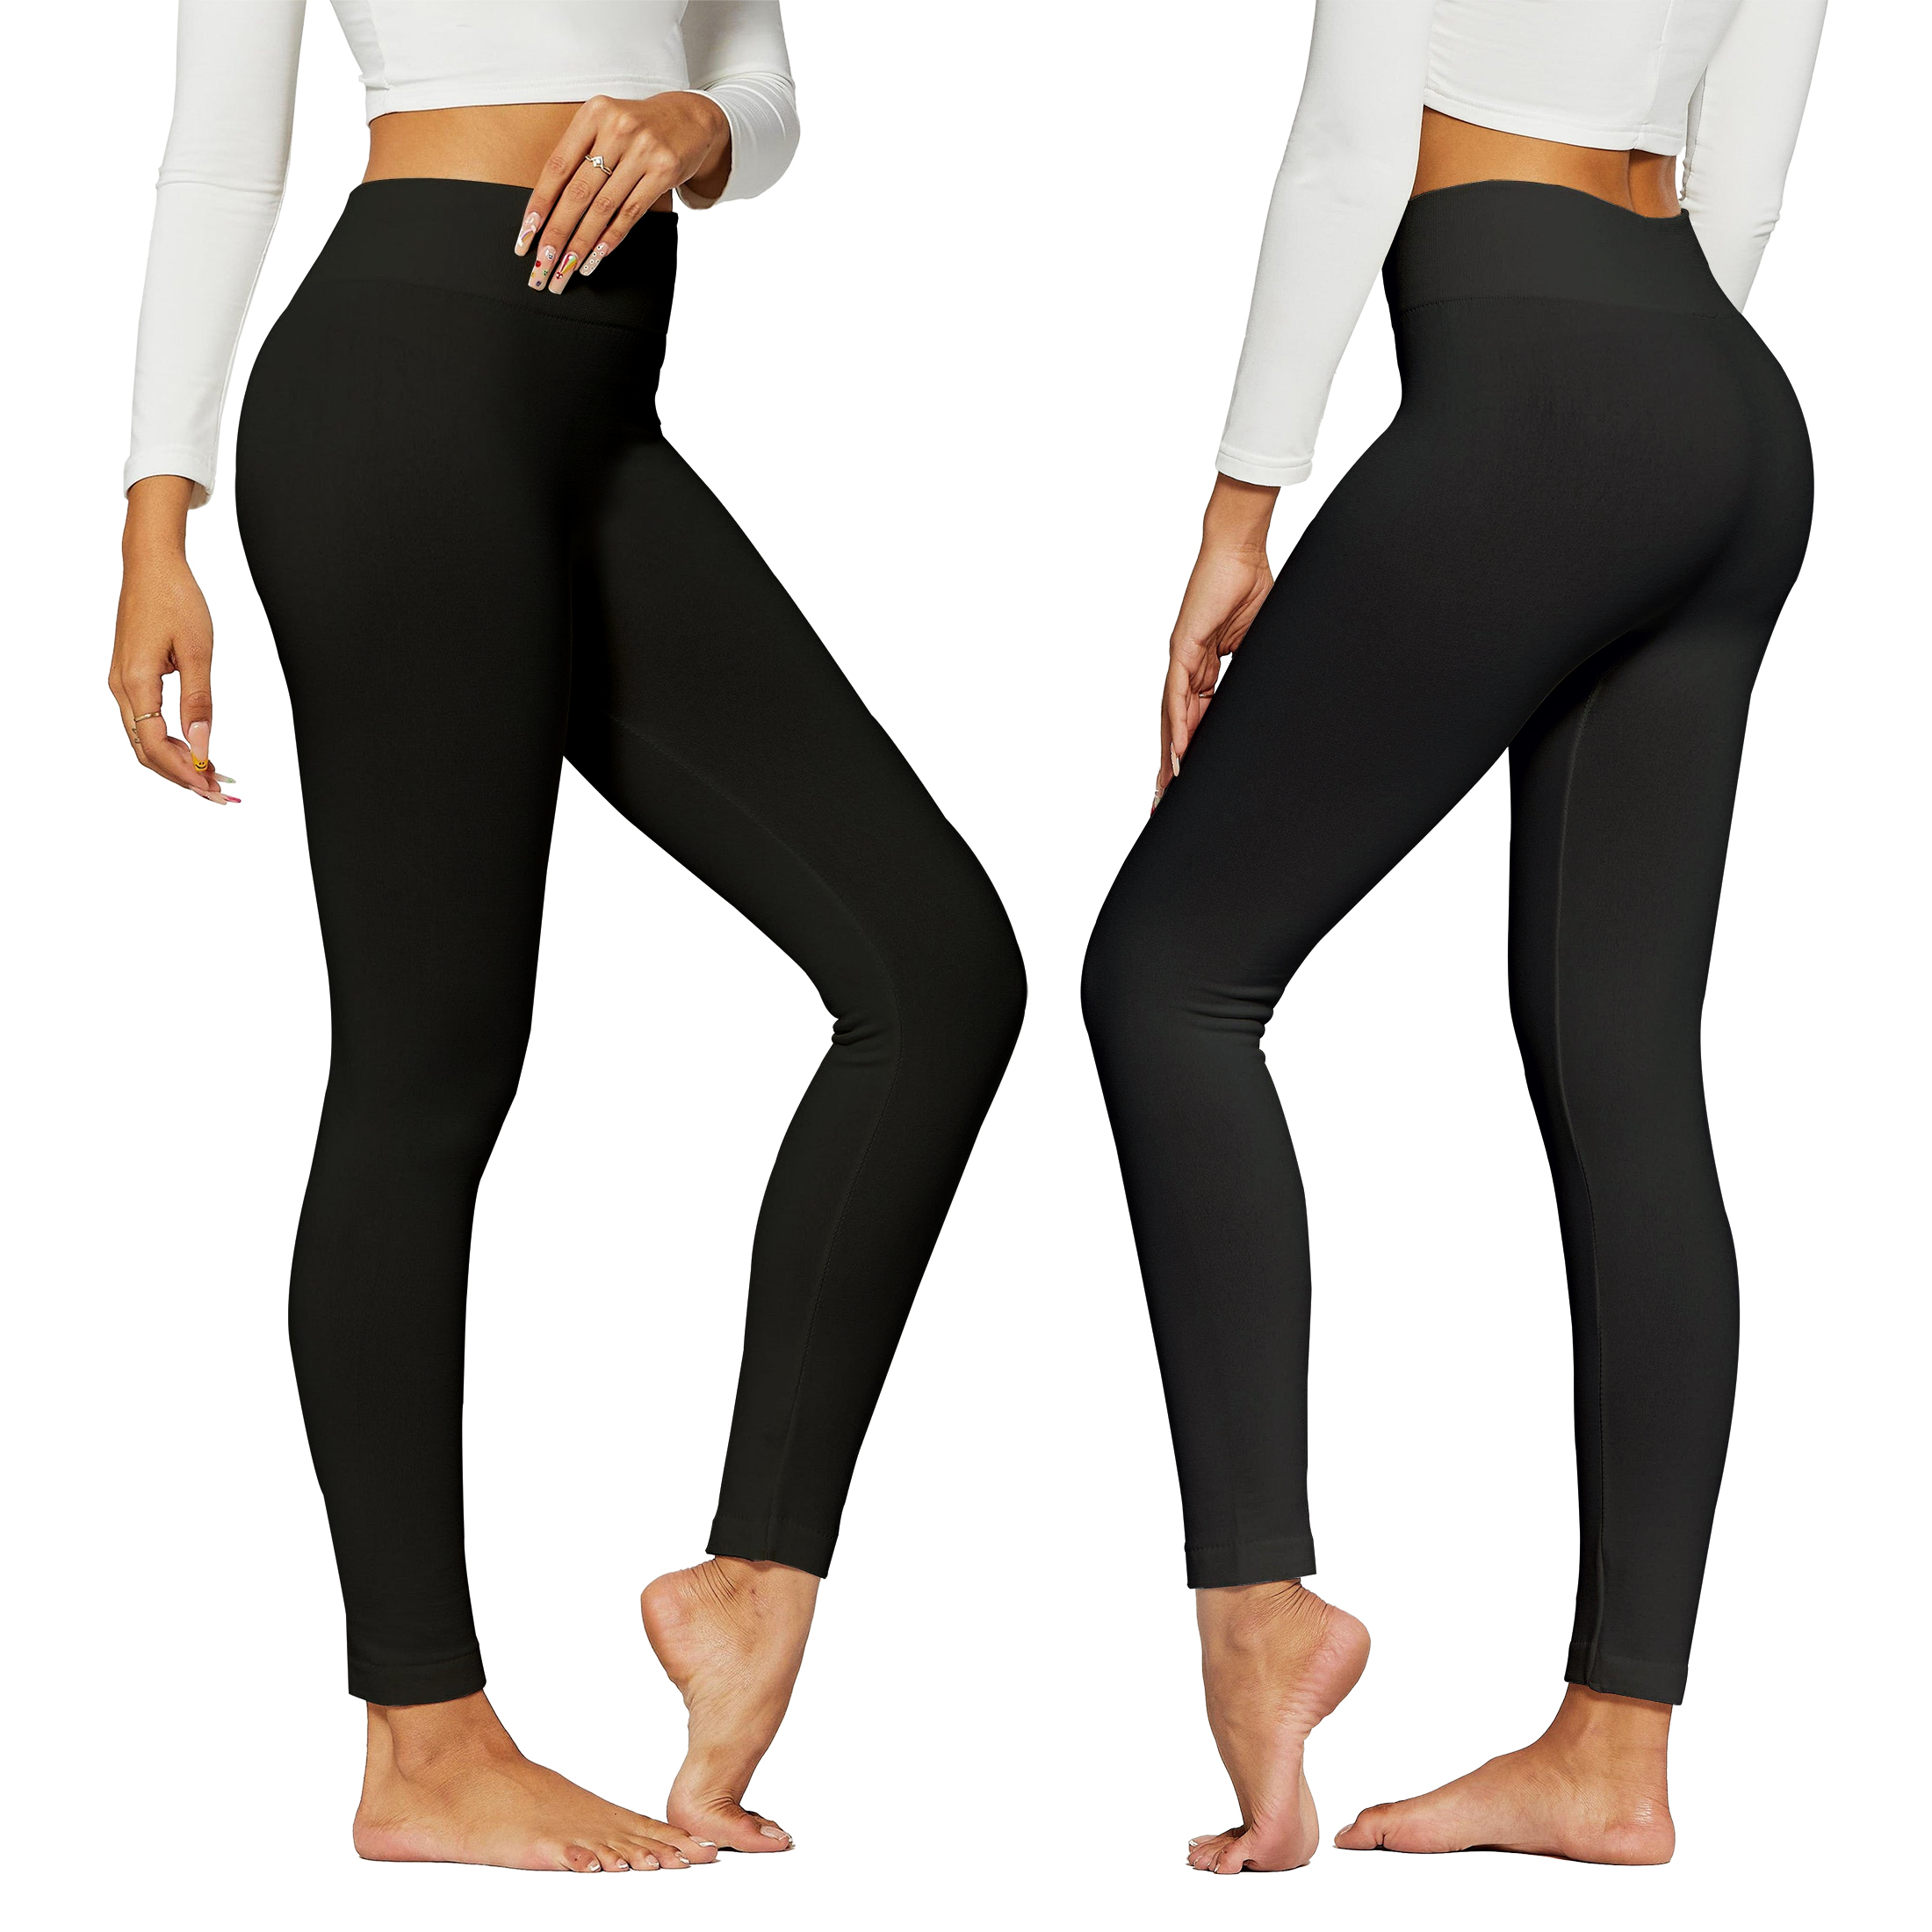 Women's Premium Quality High-Waist Fleece Lined Leggings (Plus Size Available) - Brown, 3X/4X